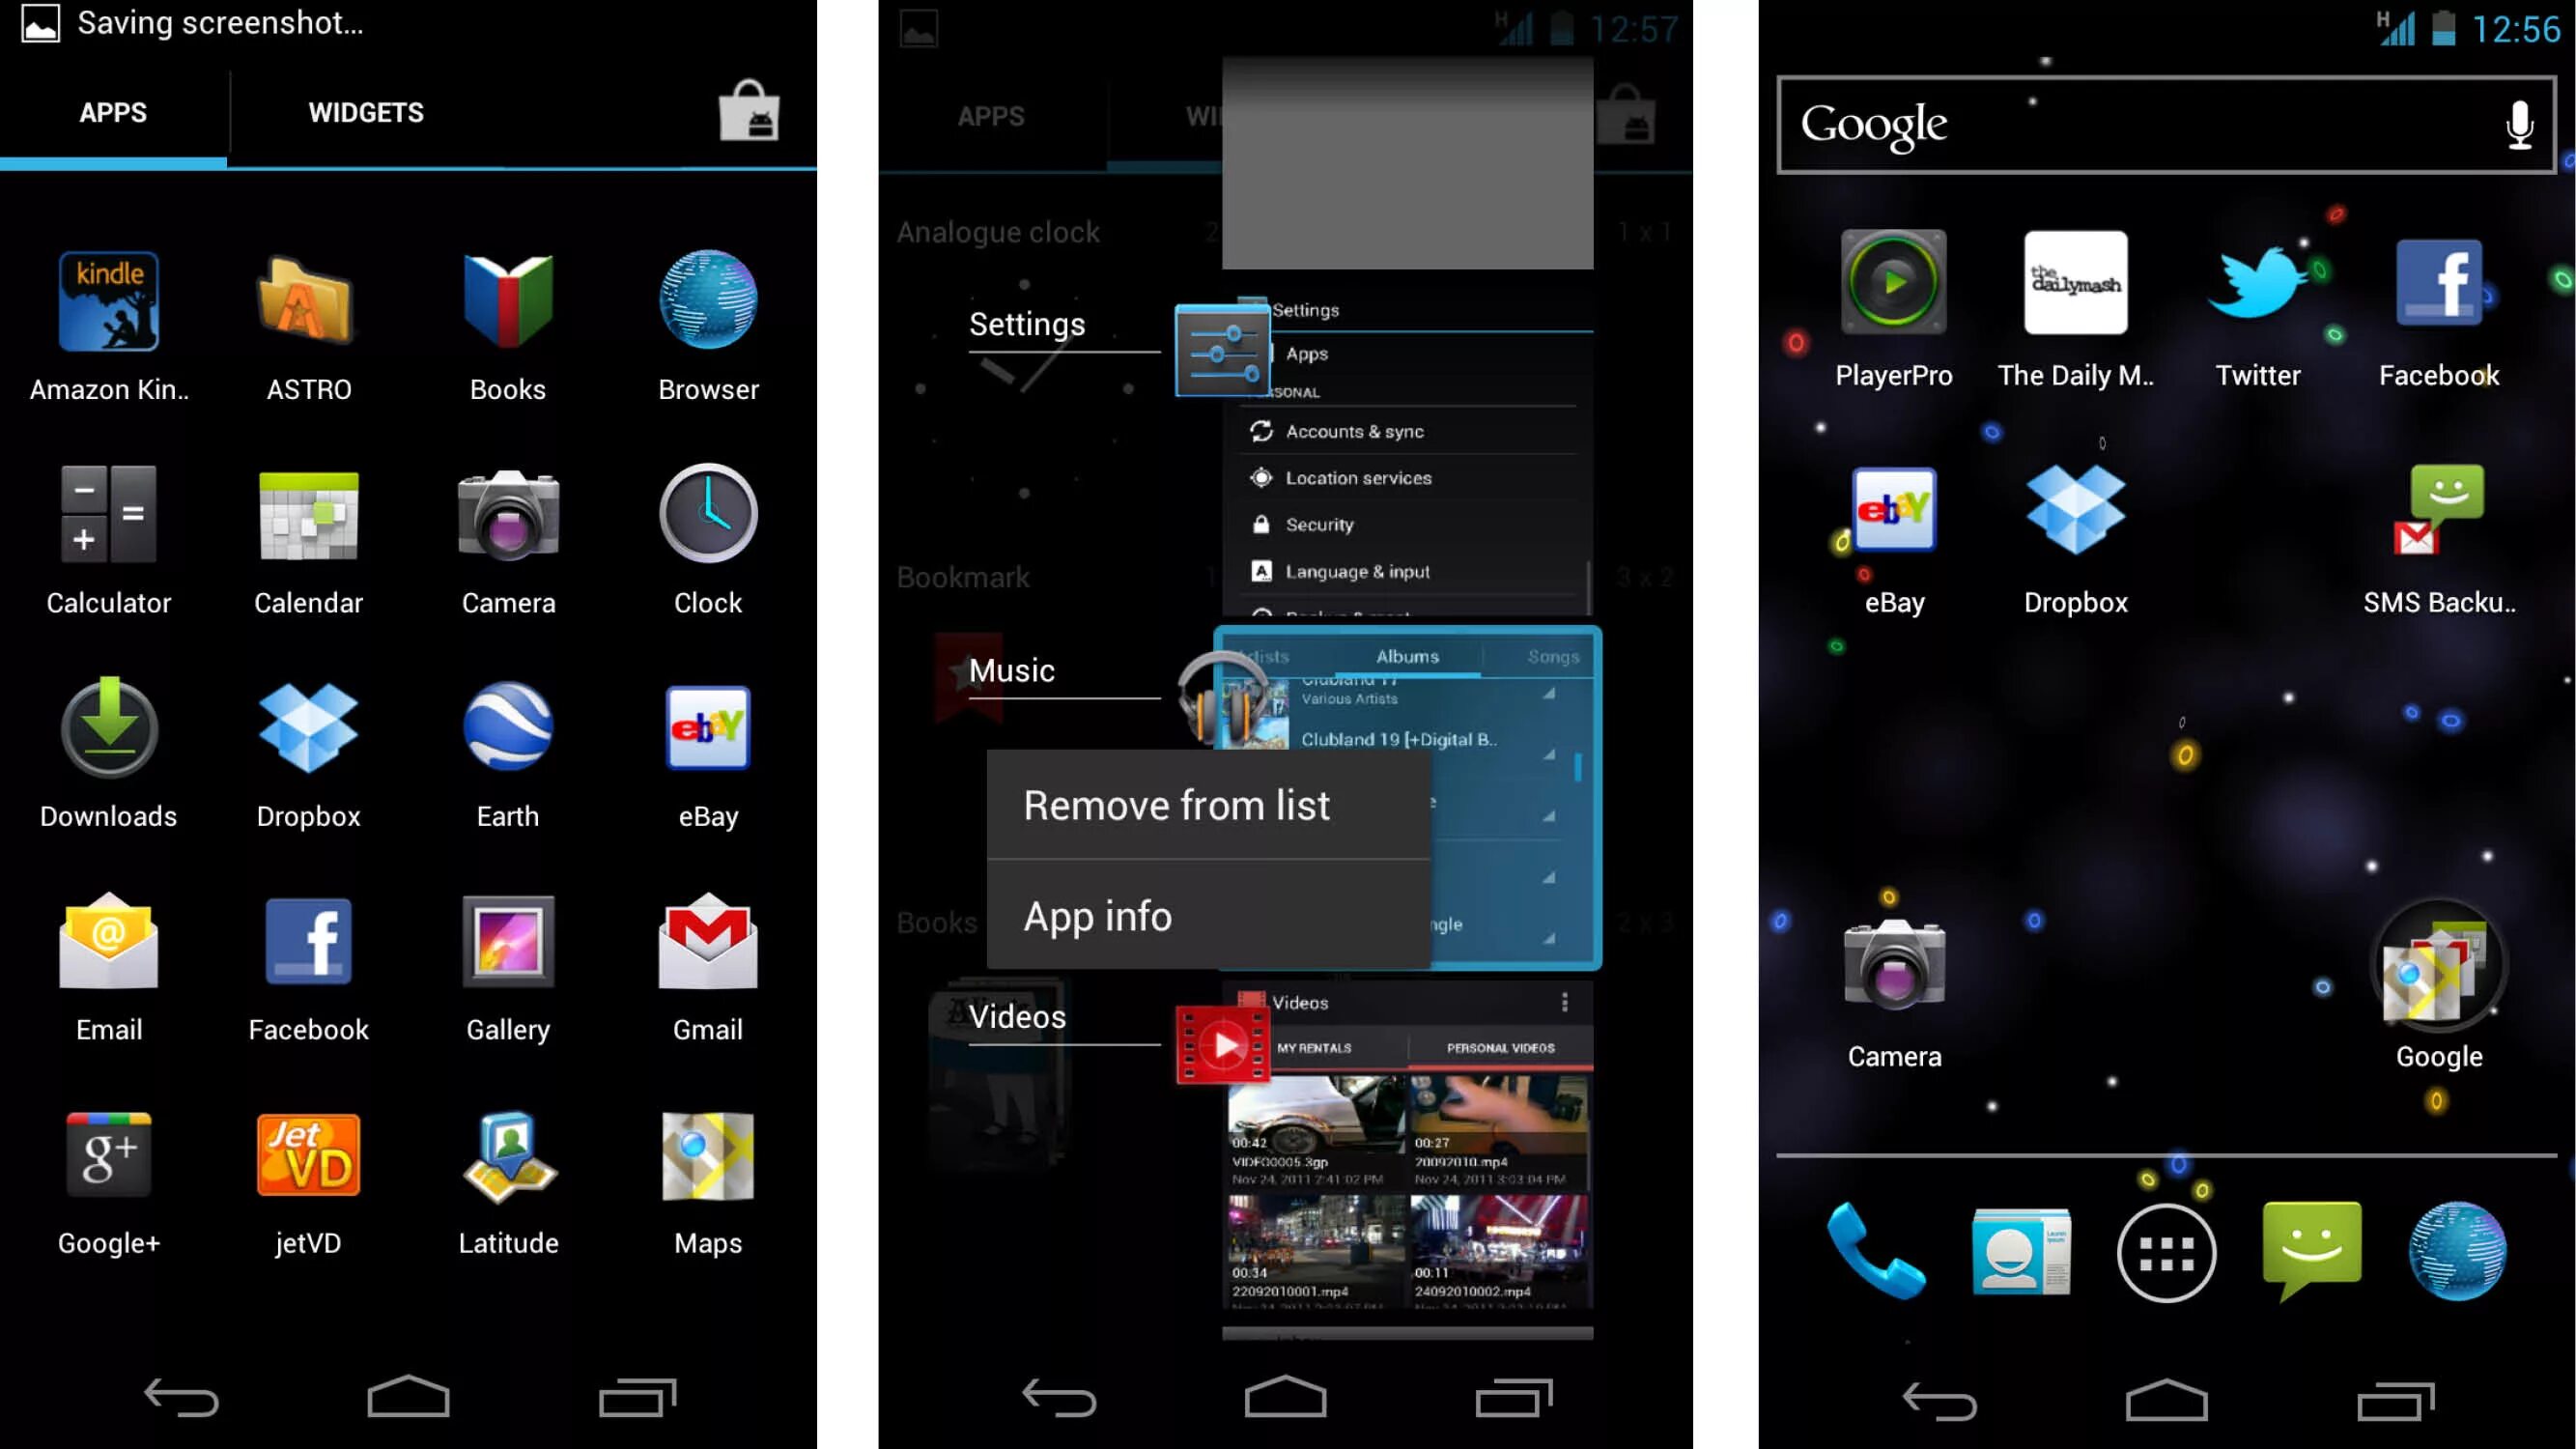 Android Ice Cream Sandwich Интерфейс. Интерфейс Android 4.0 Ice Cream Sandwich. Лучший андроид. Андроид 4.0 Ice Cream Sandwich виджеты.